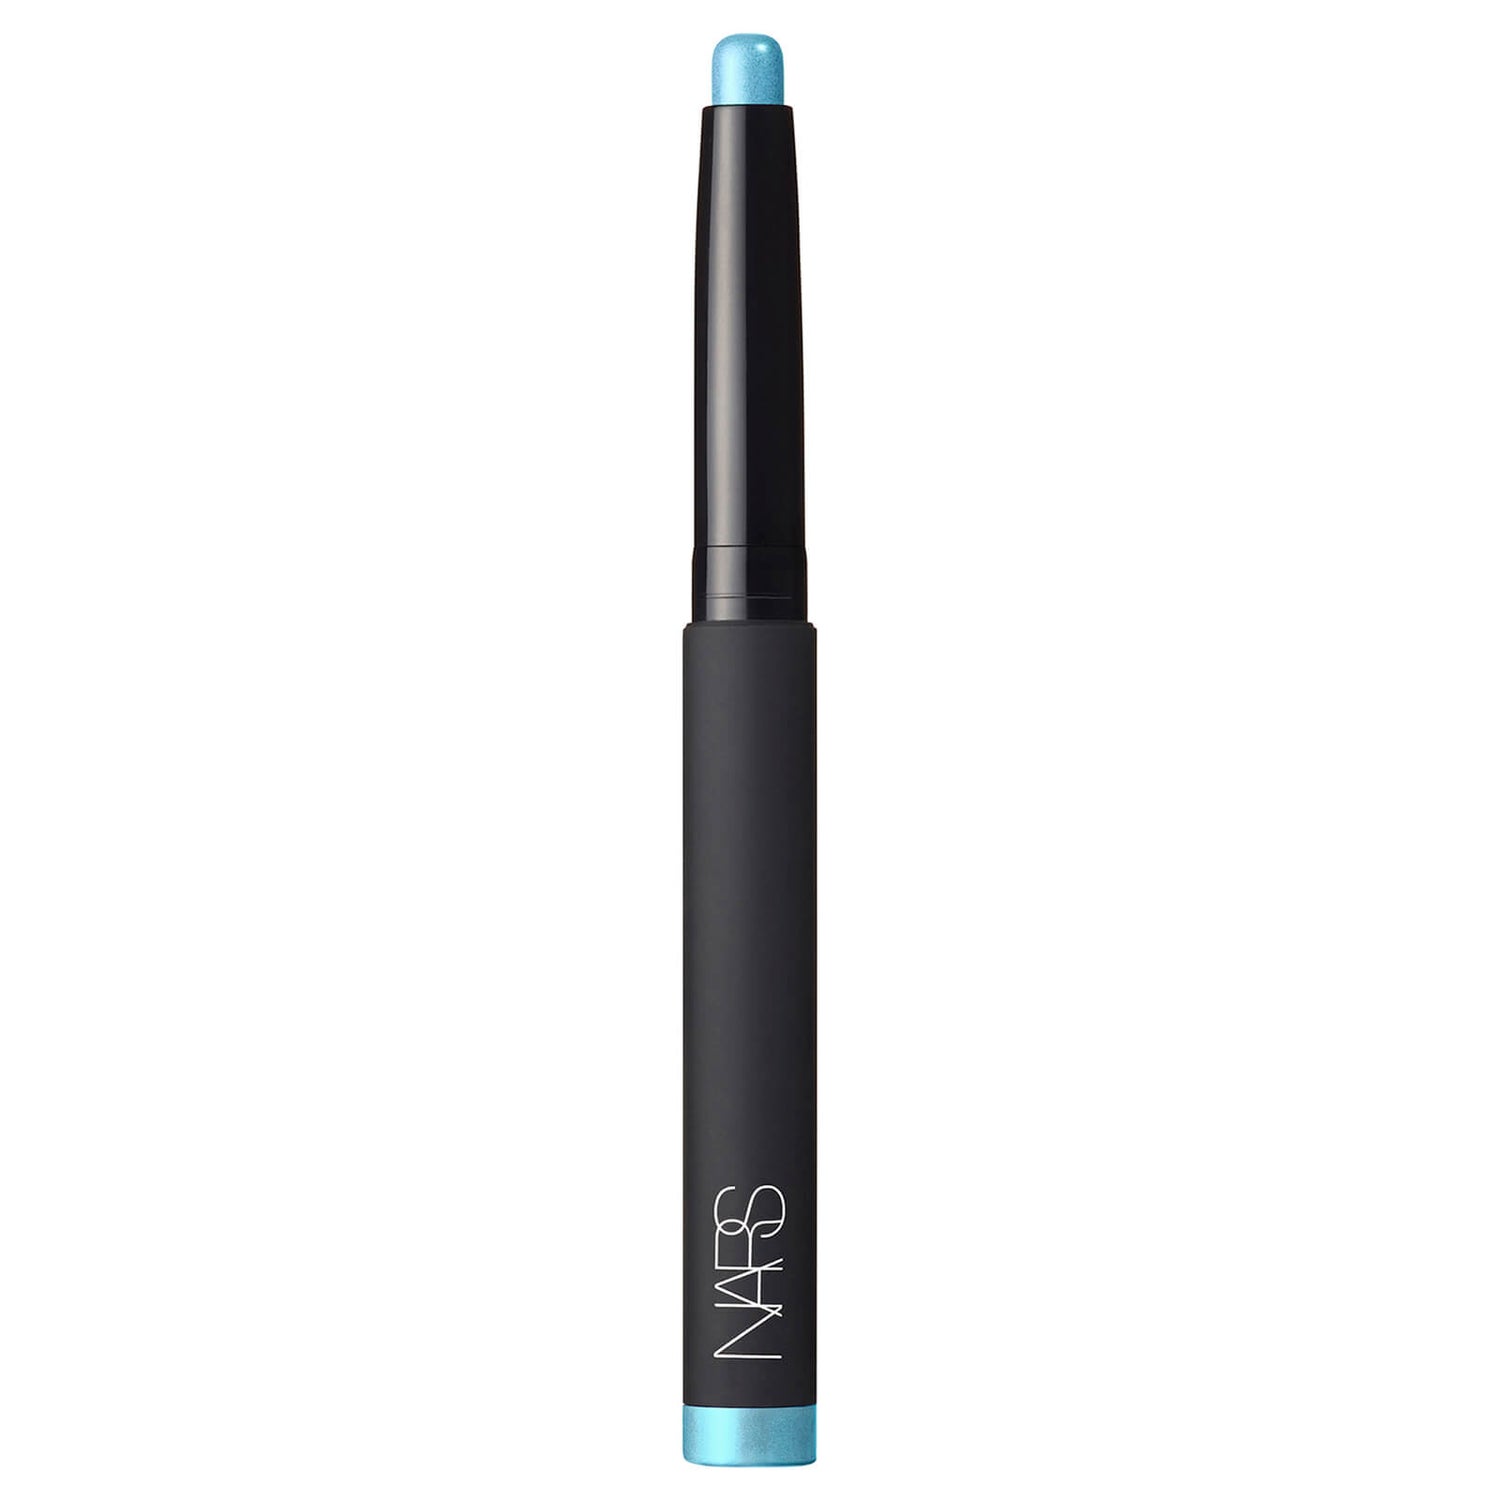 NARS Cosmetics Velvet Shadow Stick - Grande-Large 1.6g (Limited Edition)